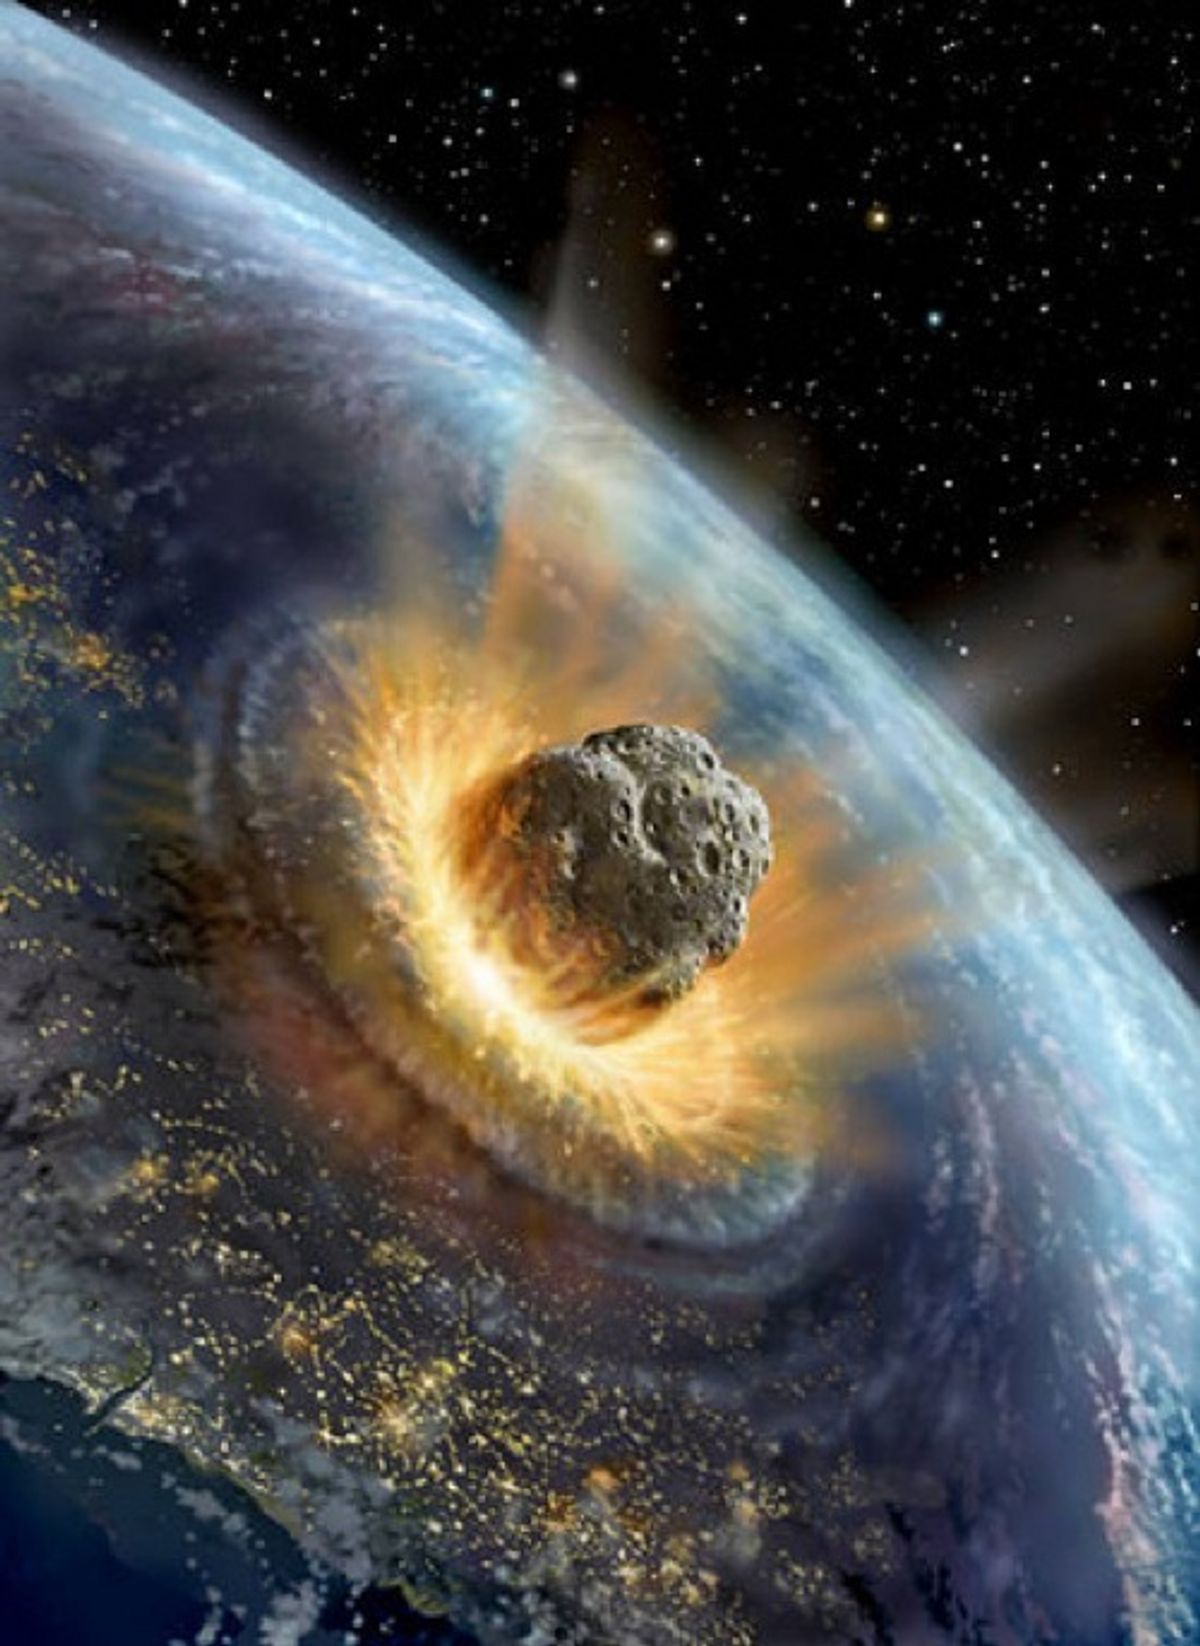 Dramatization of Apophis asteroid striking Earth